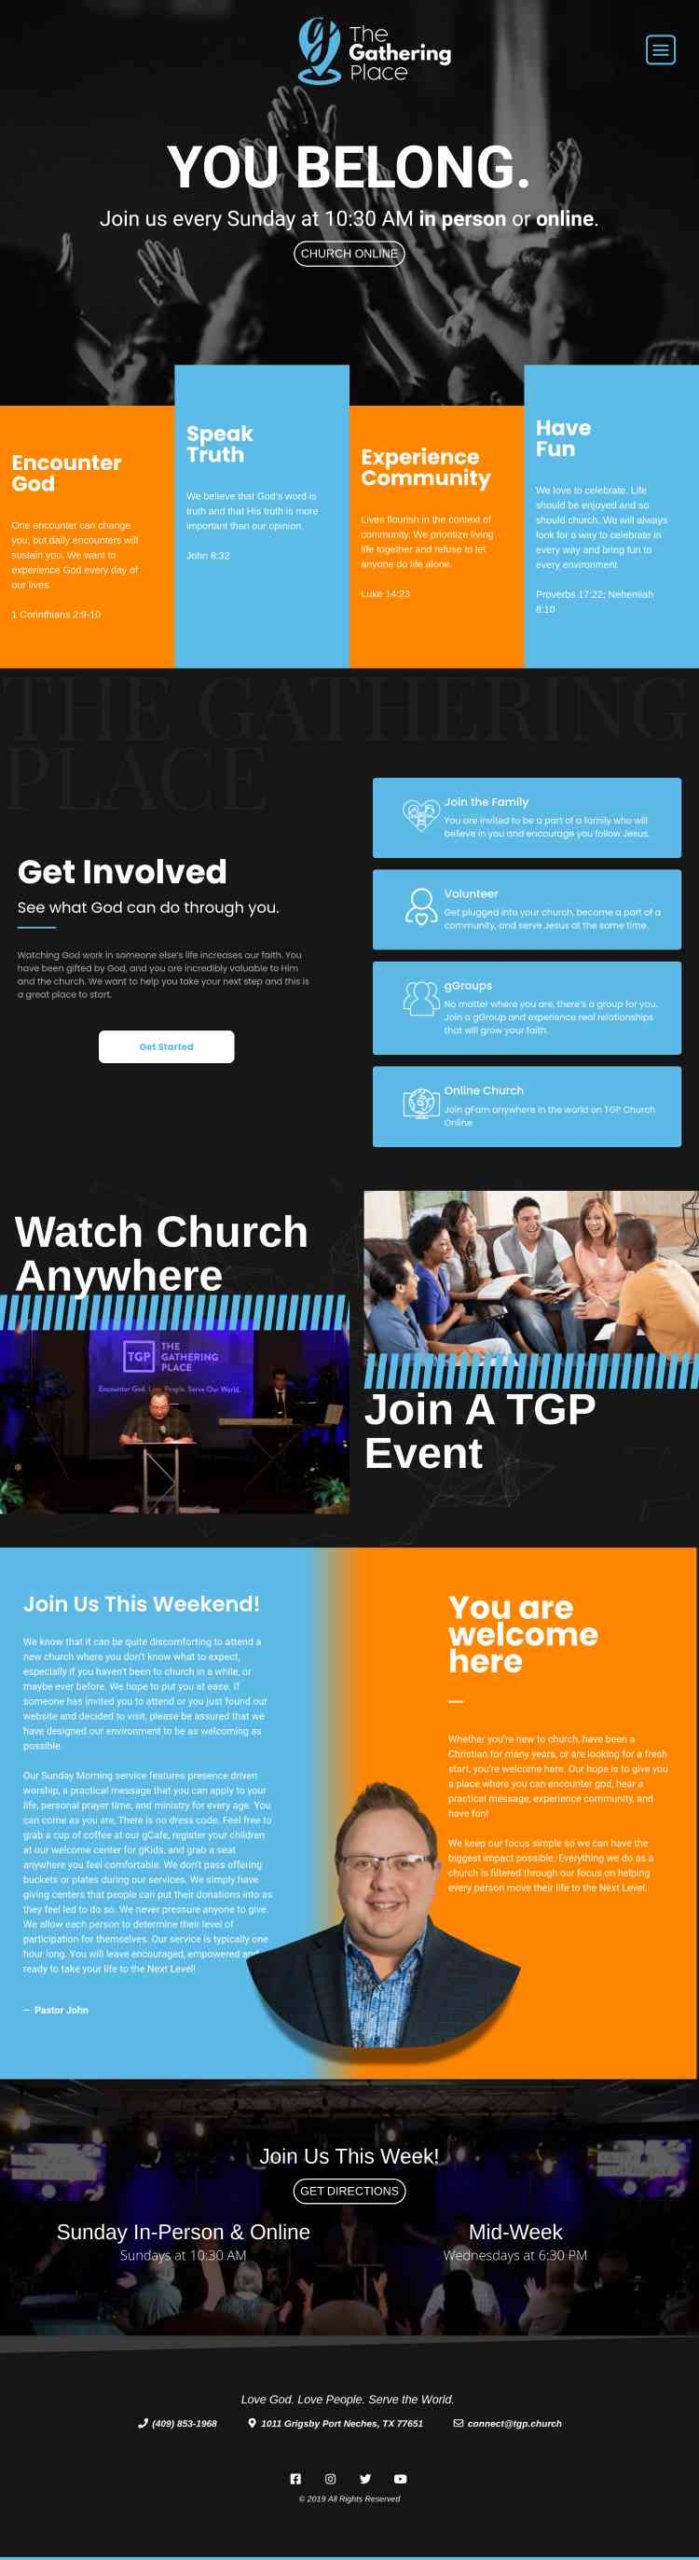 Church Website Examples